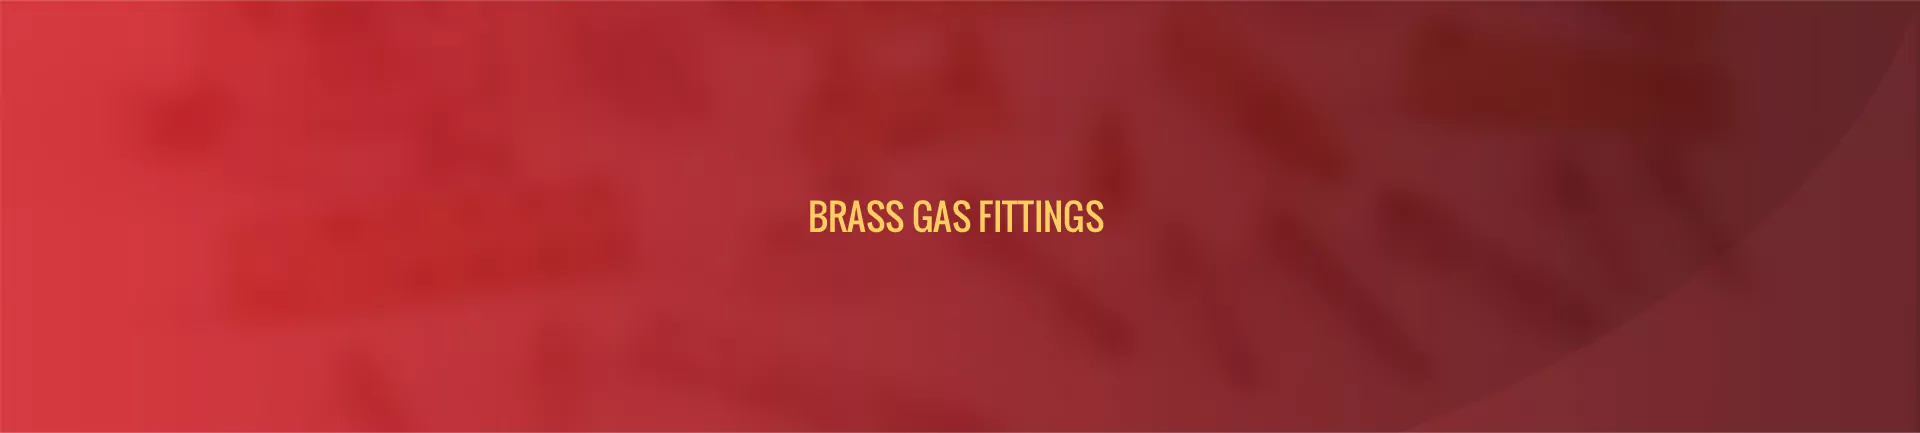 brass-gas-fittings-banner